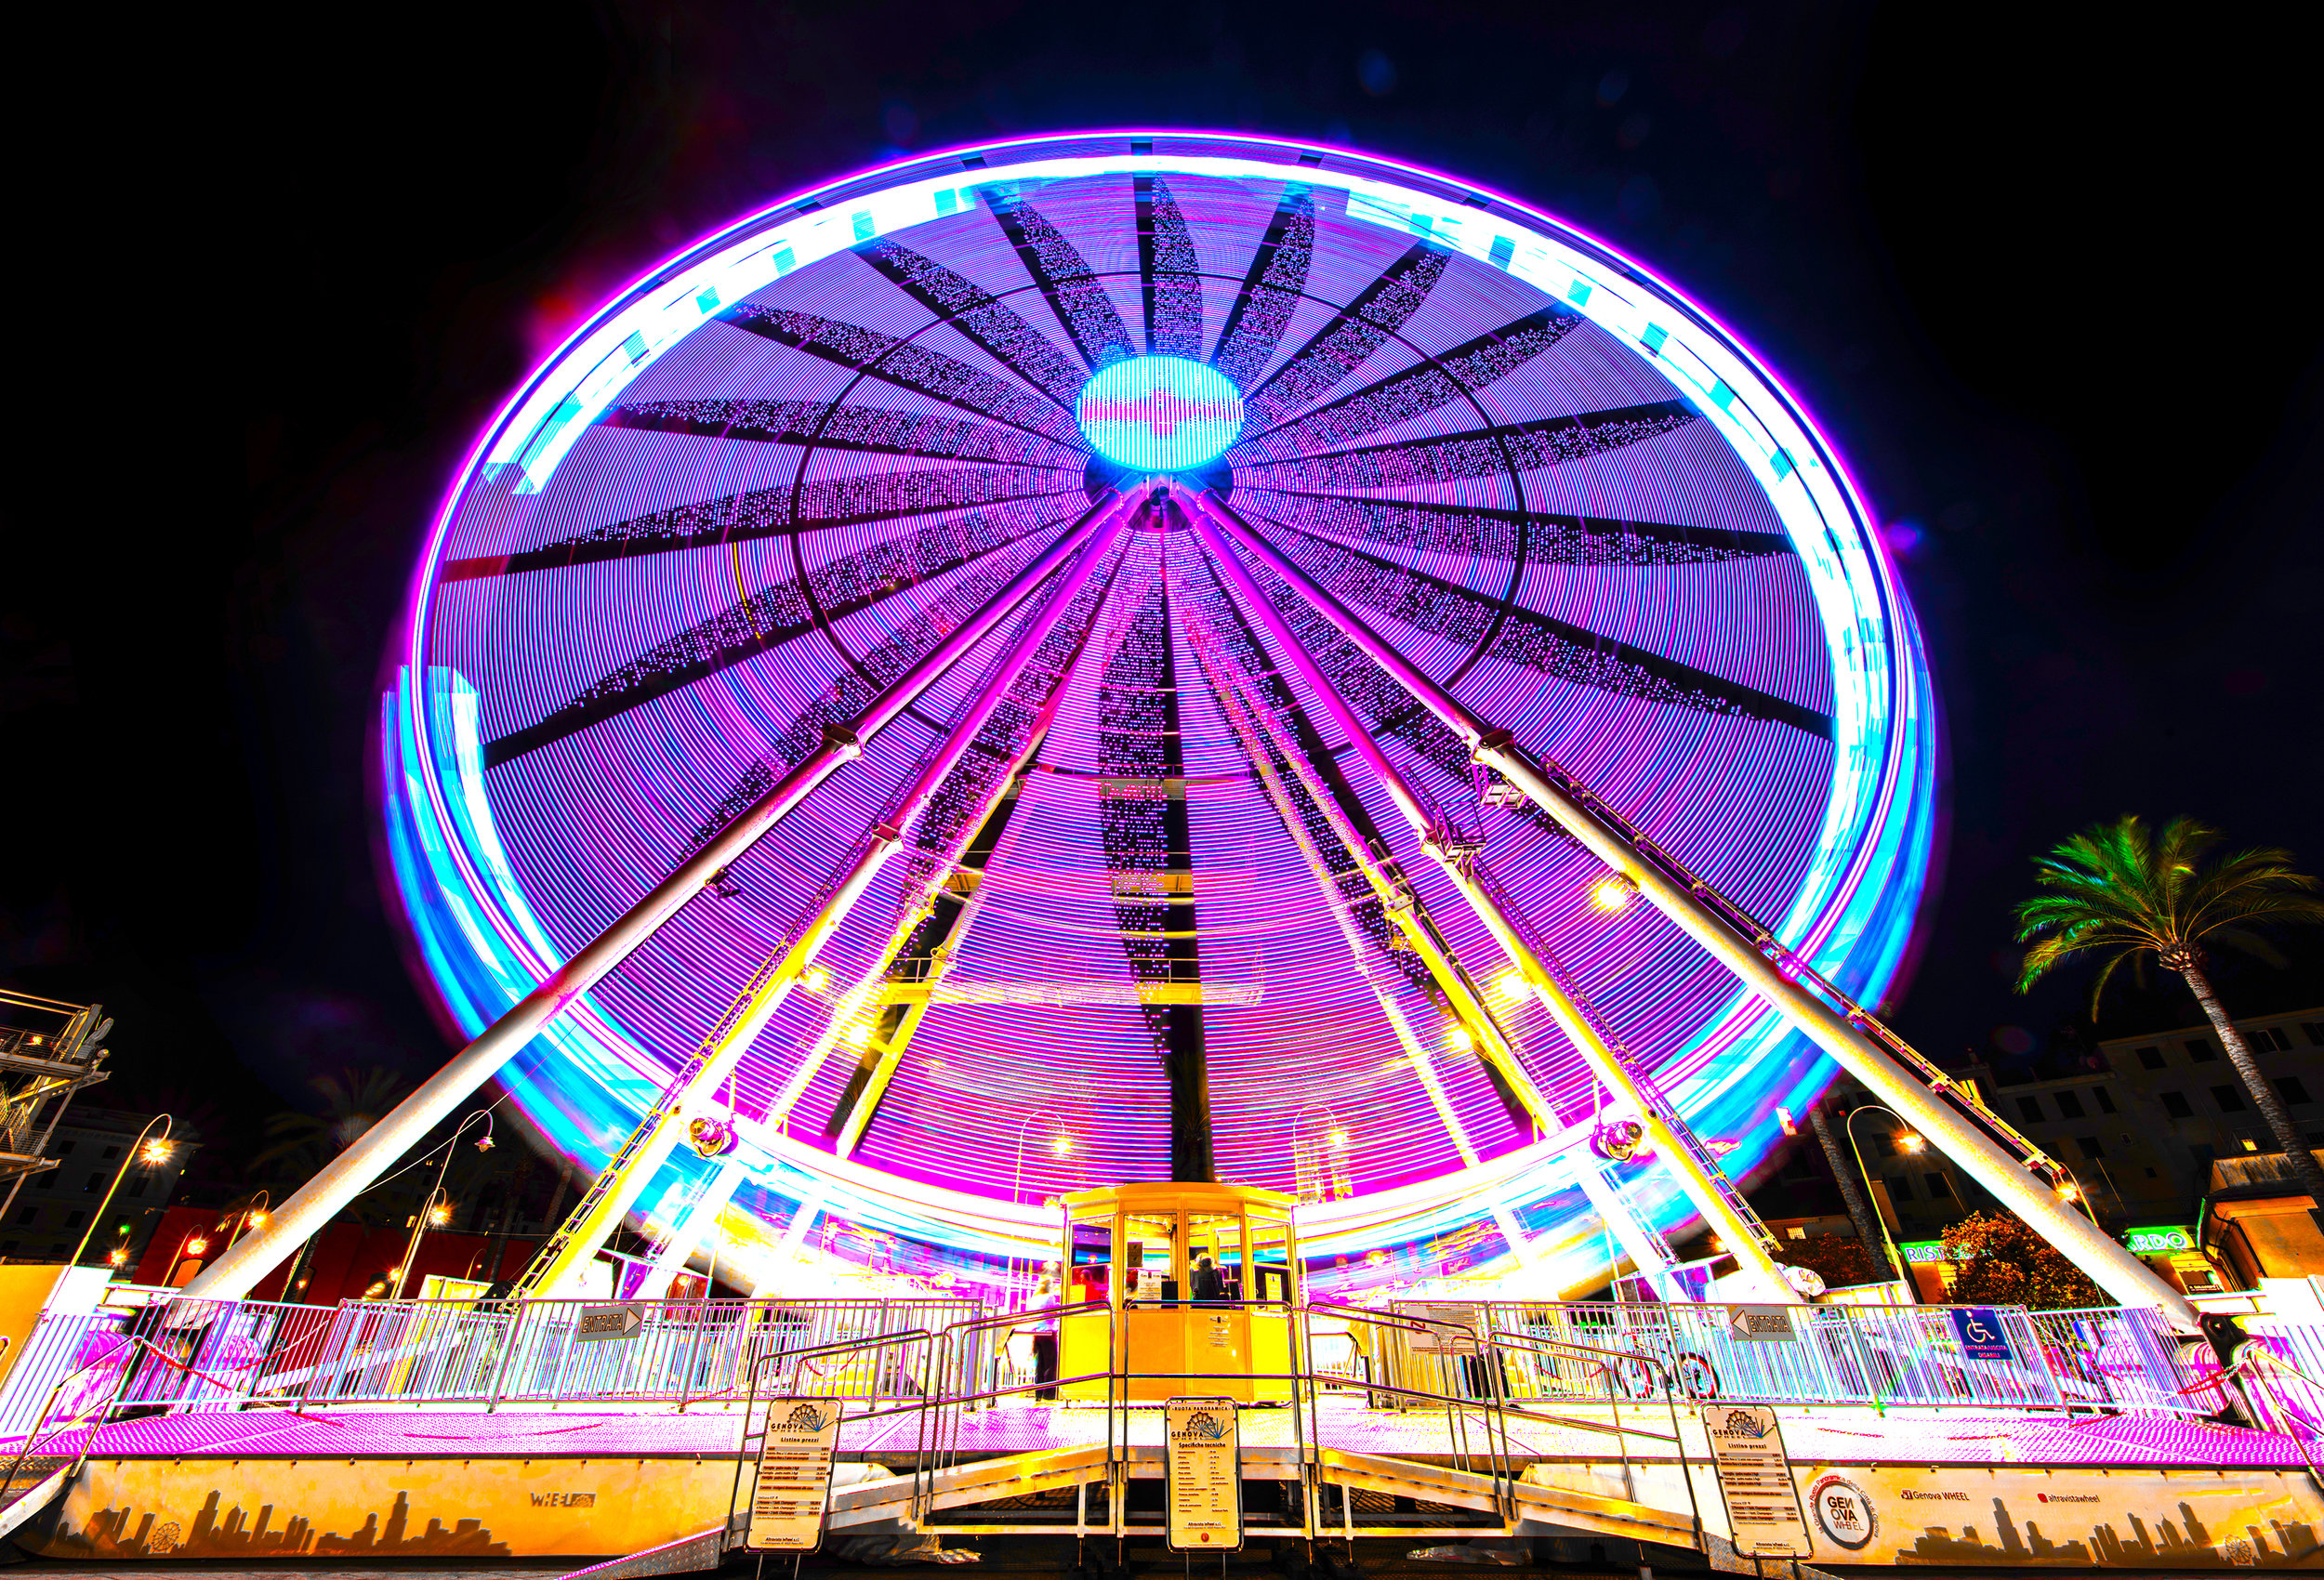 The Giant Ferris Wheel in the city of Genova, Italy